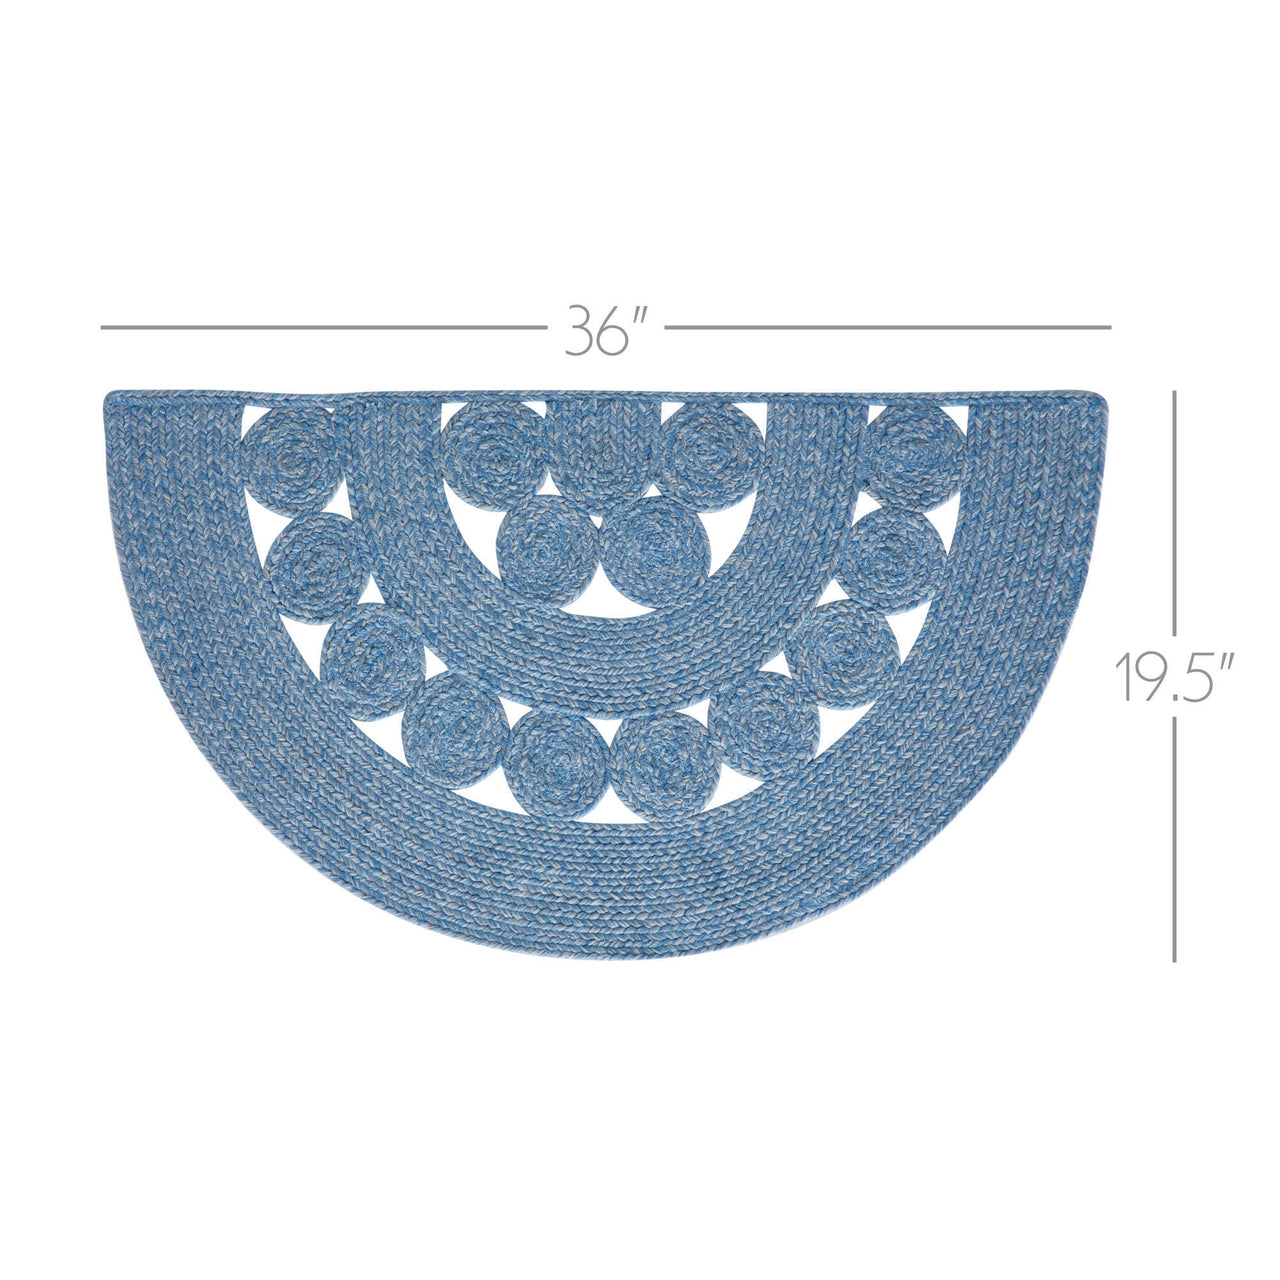 Celeste Blended Blue Indoor/Outdoor Half Circle Braided Rug 19.5"x36" VHC Brands